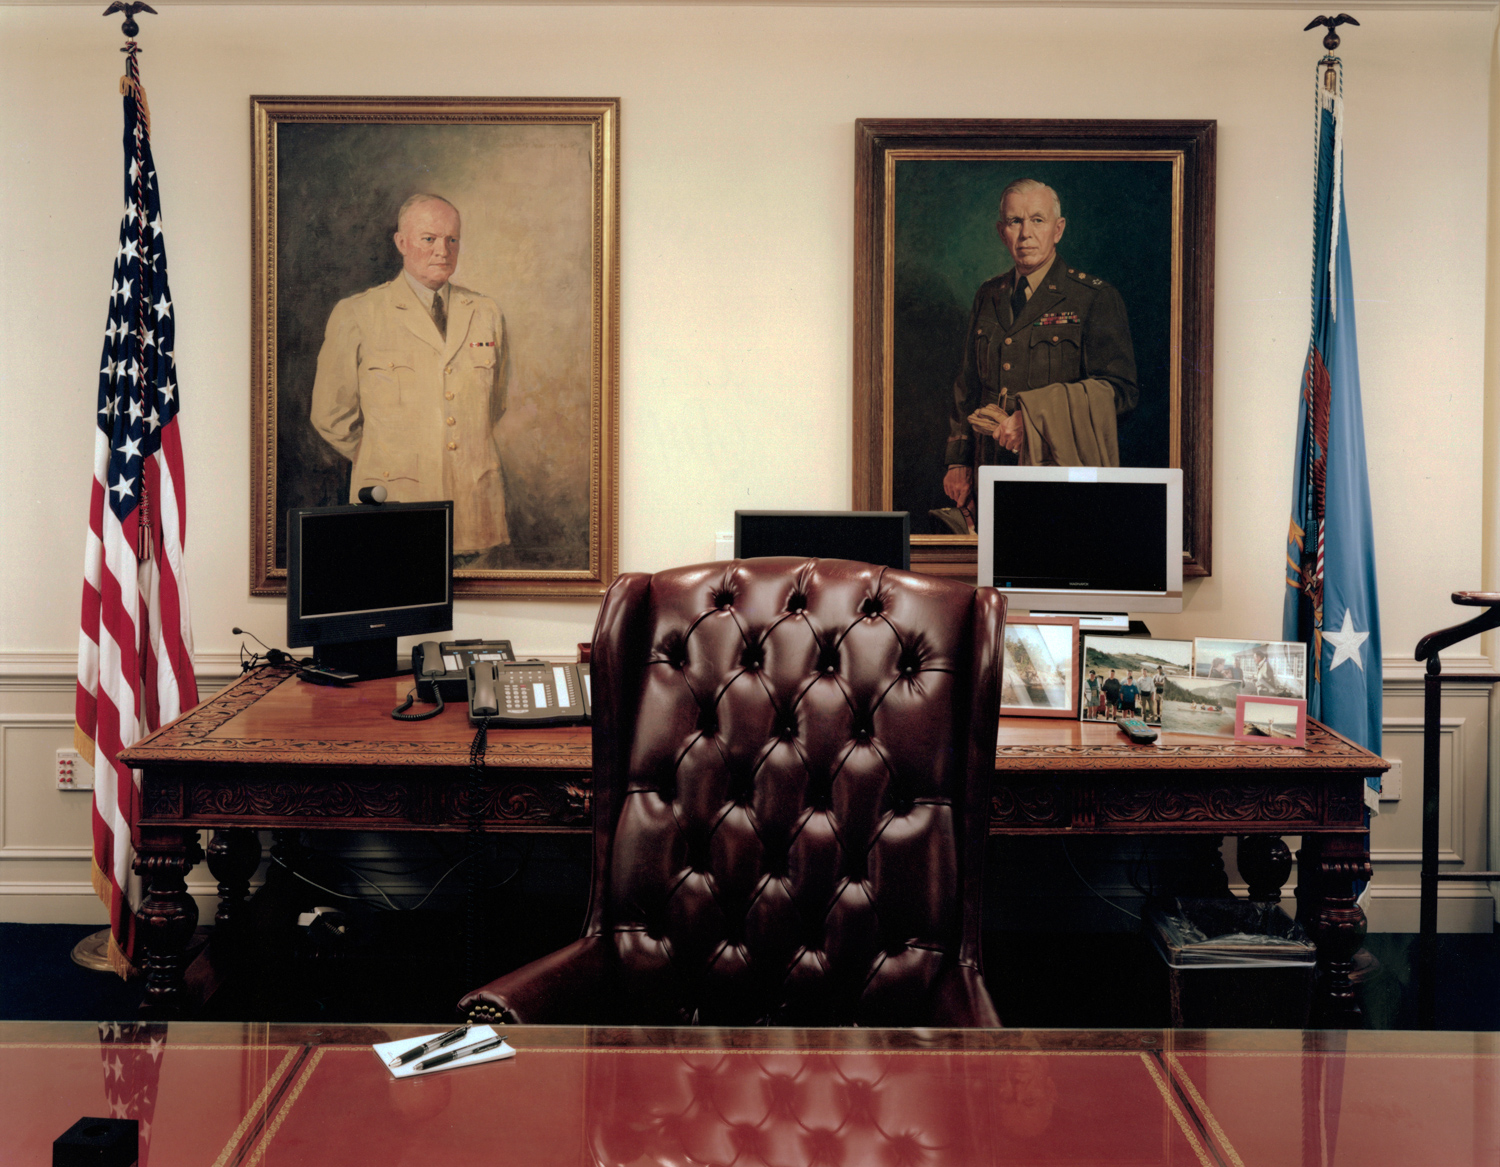 The office of Robert Gates, former U.S. Defense Secretary, at the Pentagon.